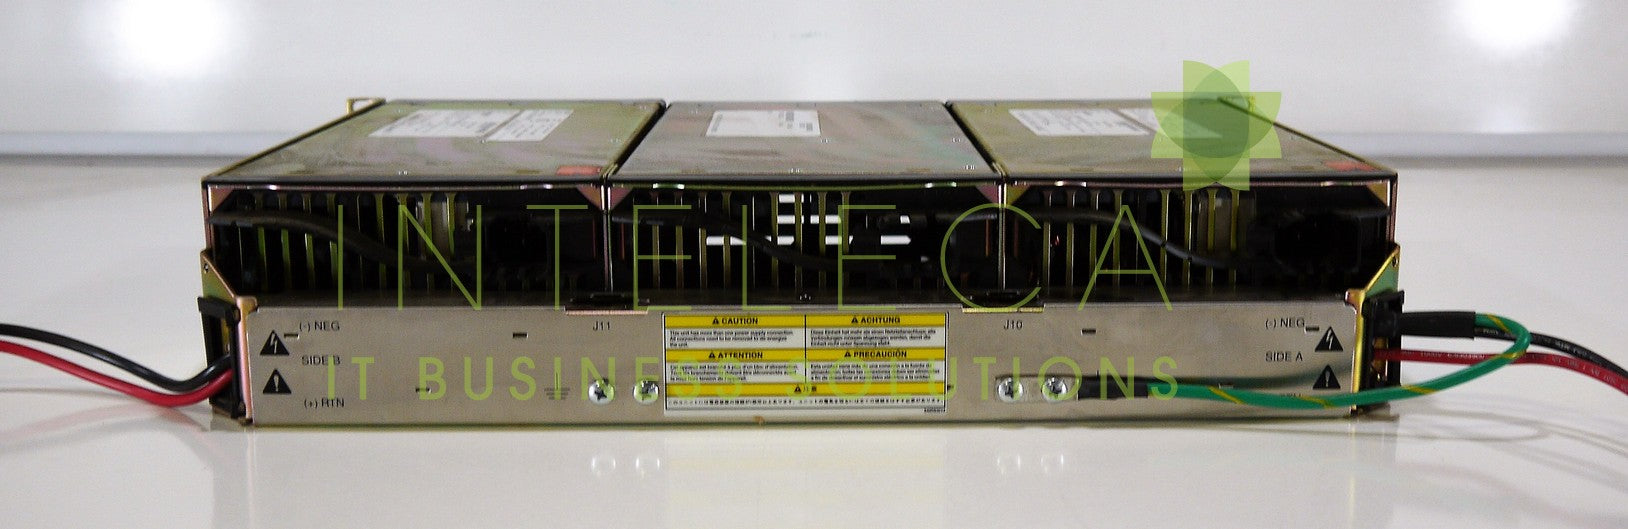 CISCO 15540-ACPS-N-E 15540 NEBS ETSI AC POWER RECTIFIER